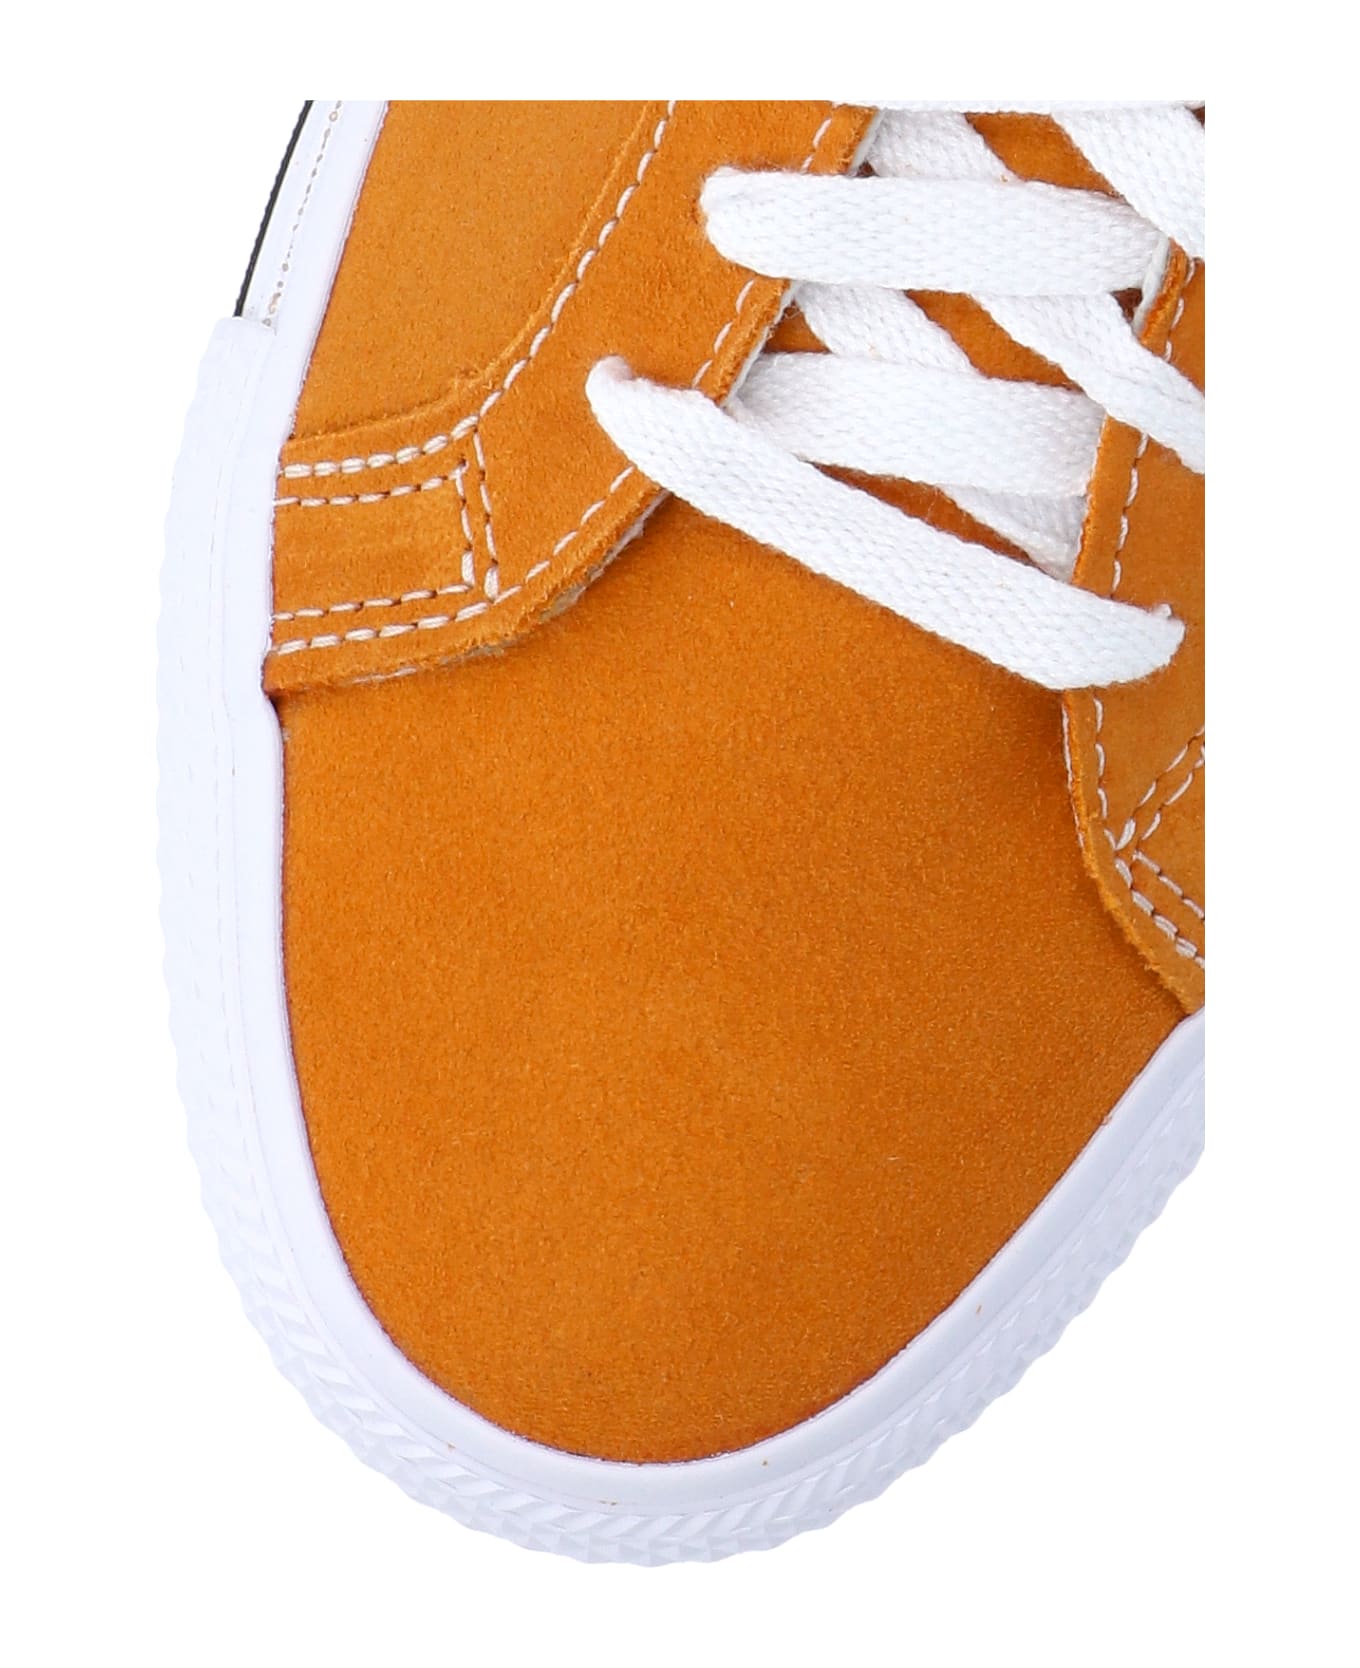 Converse 'one Star Pro' Sneakers - Orange